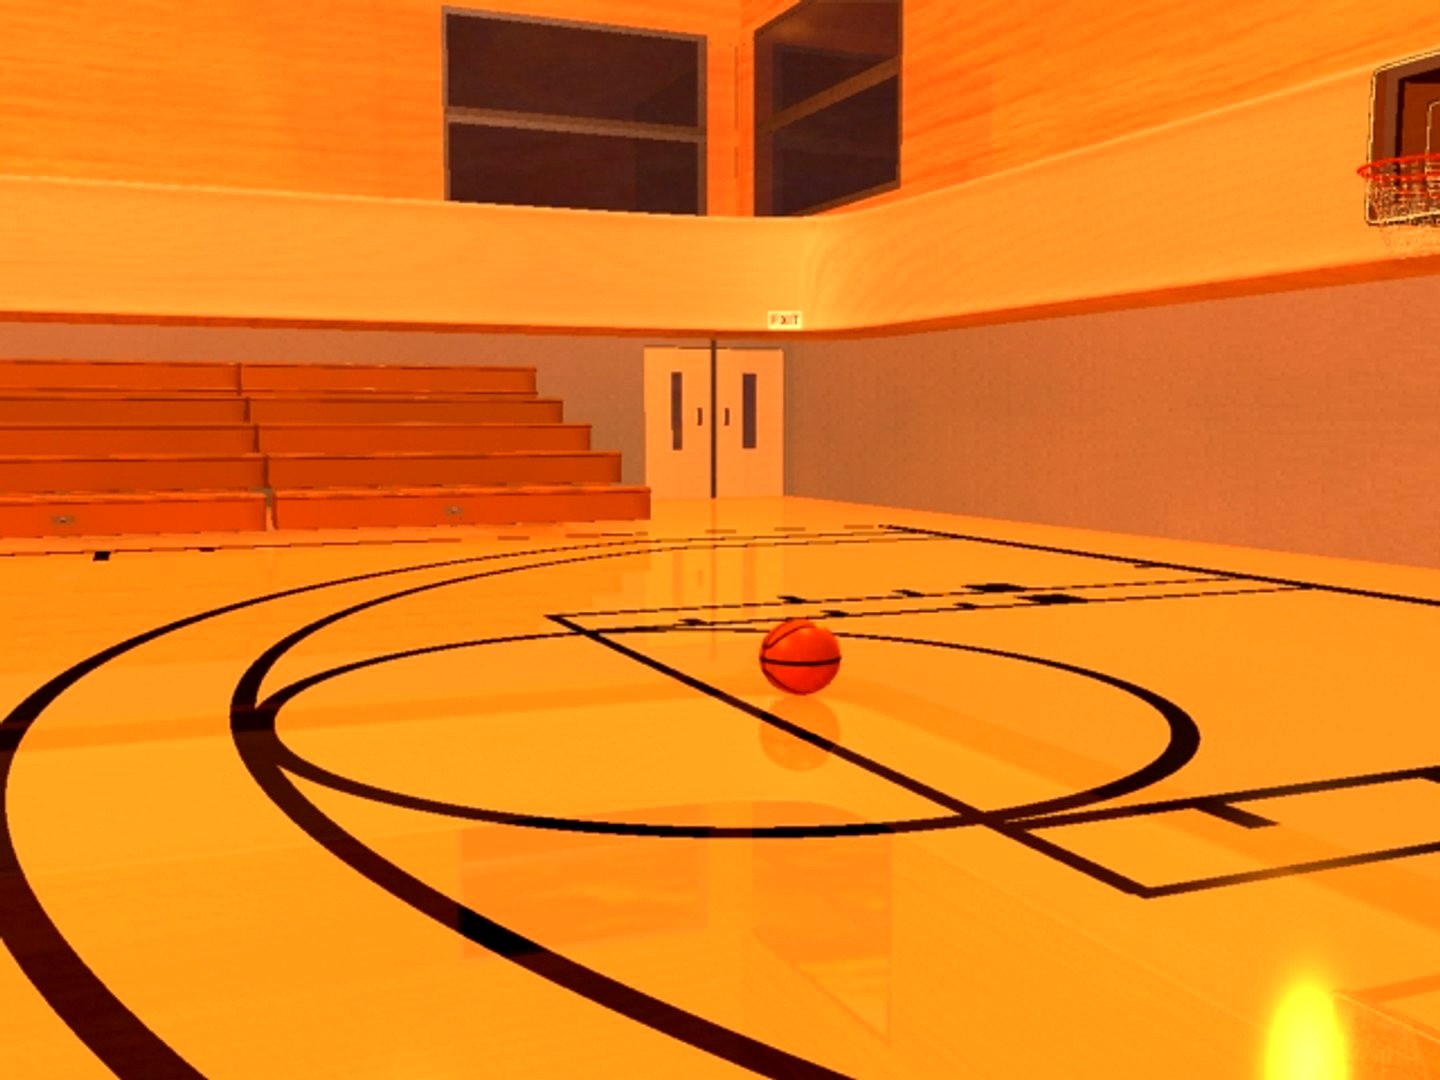 Daves basketball court.max